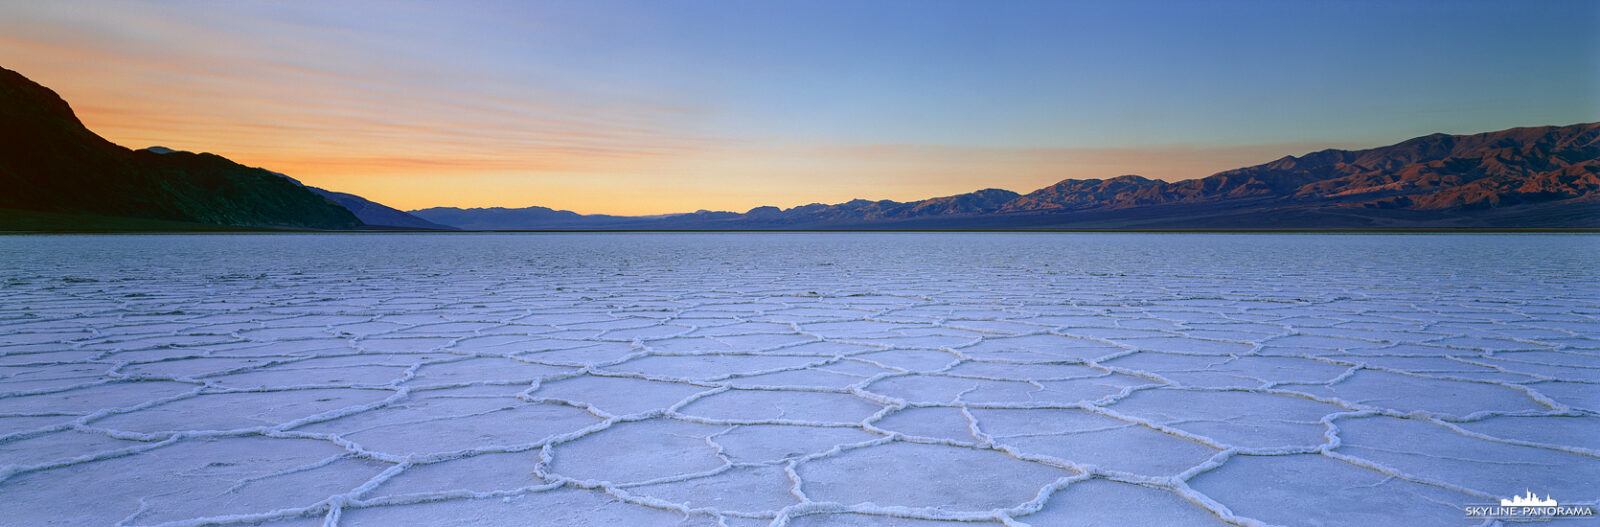 Death Valley Badwater Basin - Salt Flats (p_01142)